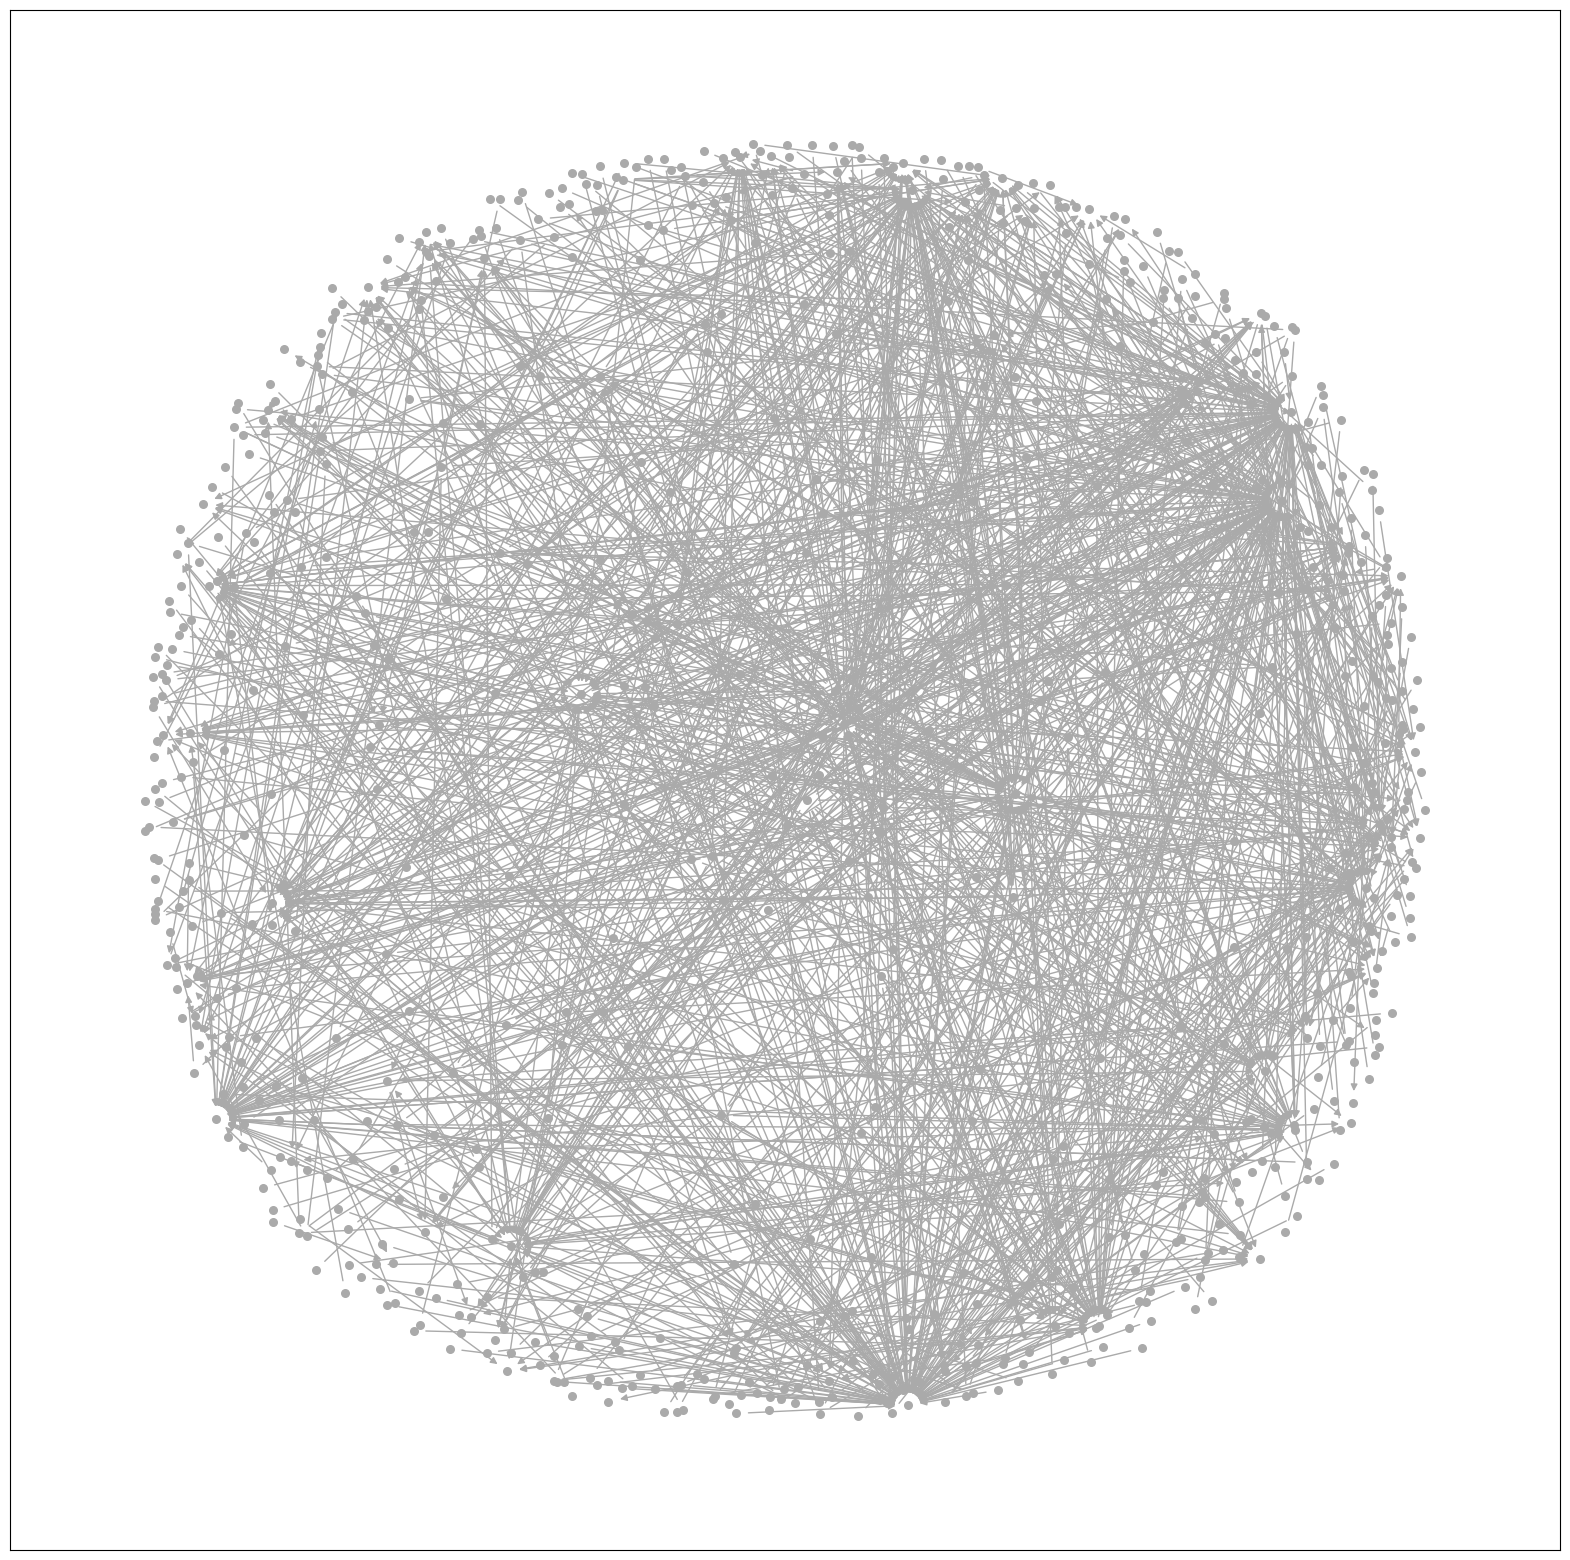 5. Visualizing the graph with Matplotlib